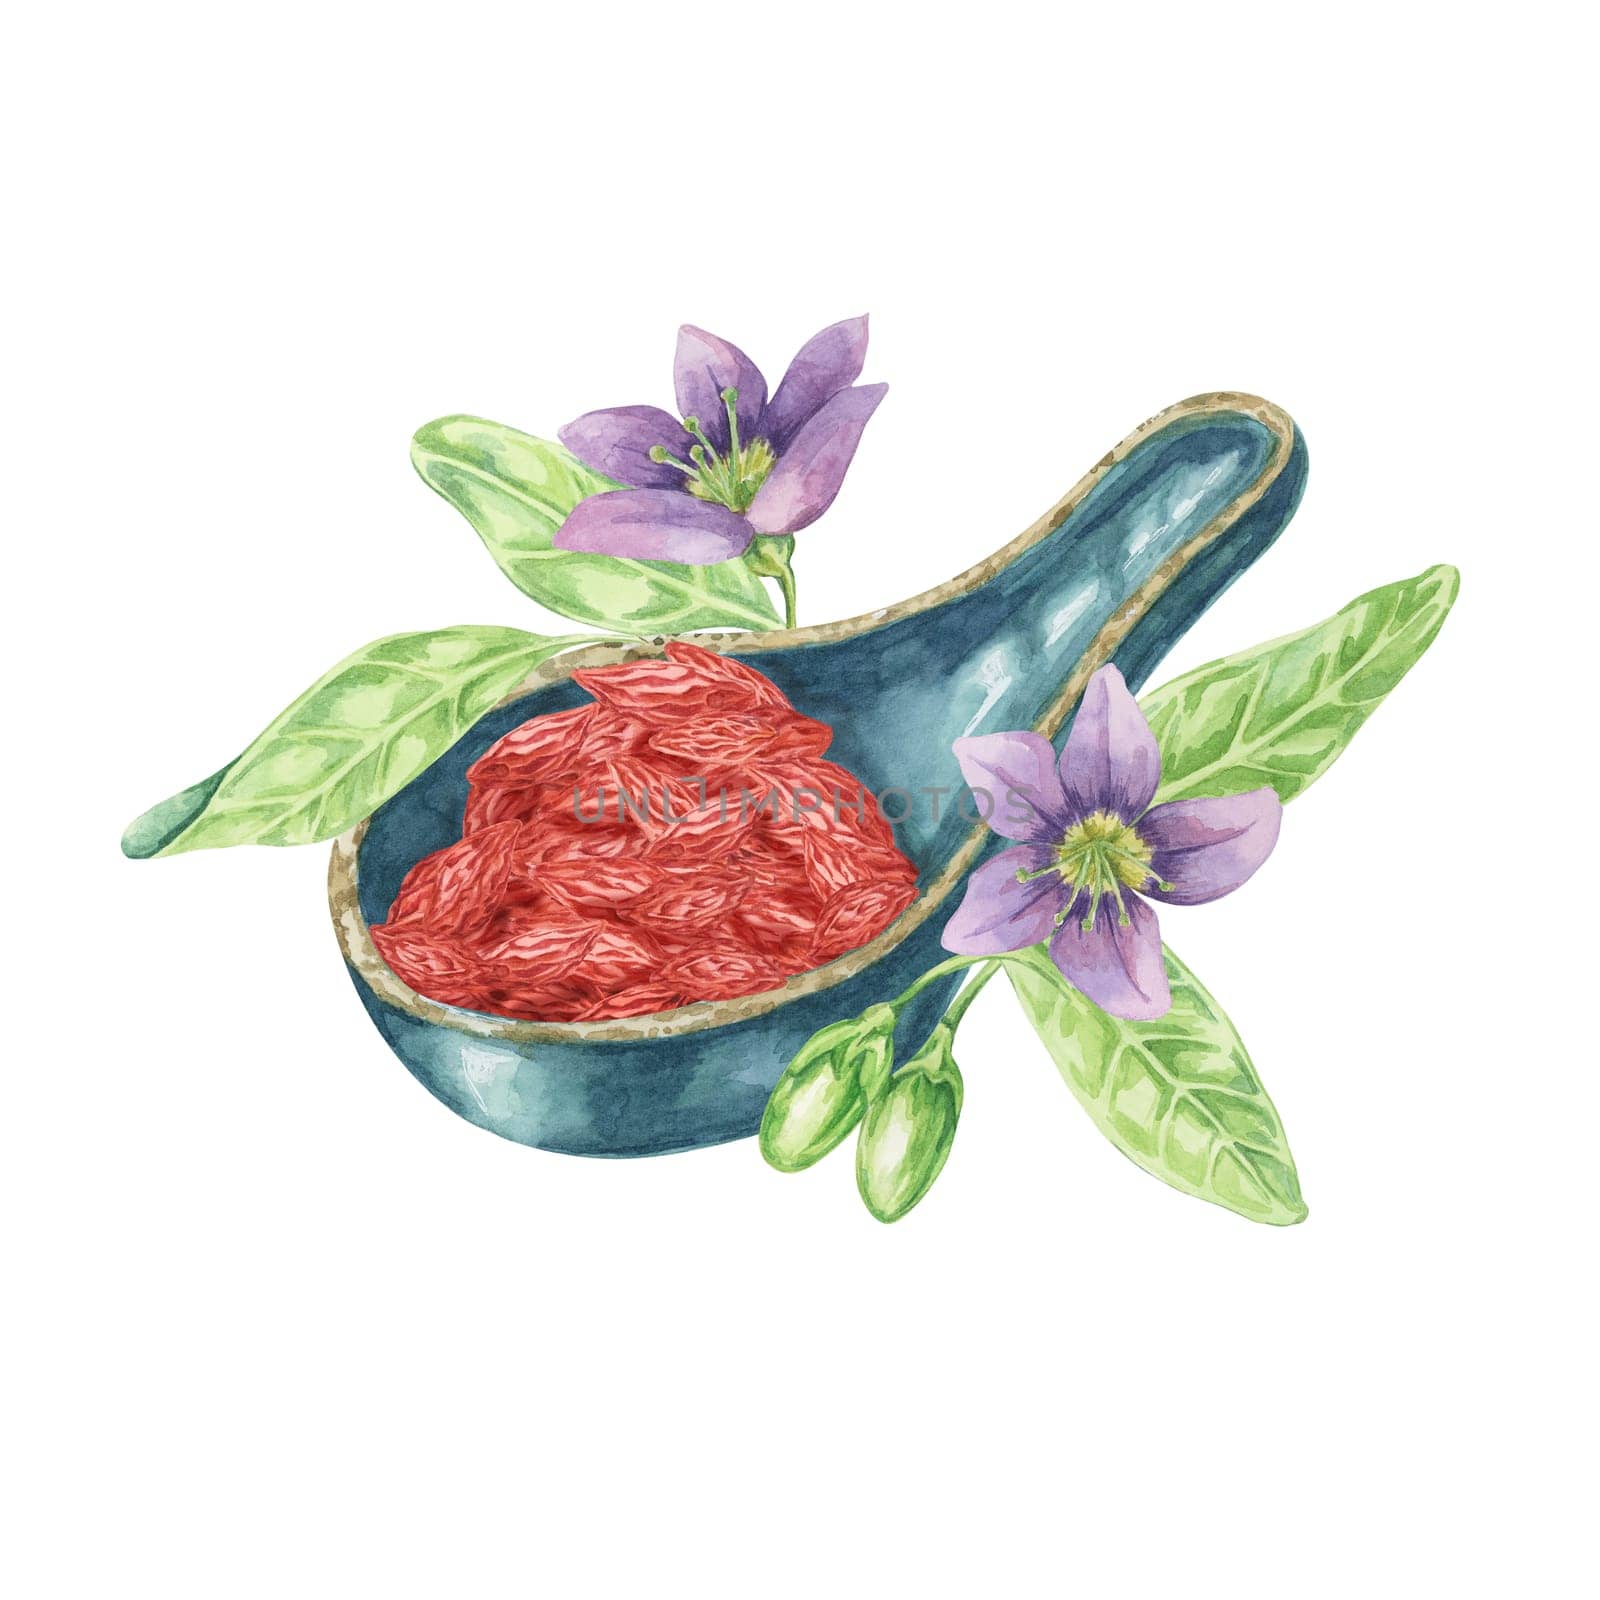 Goji berries in ceramic Asian spoon by Fofito